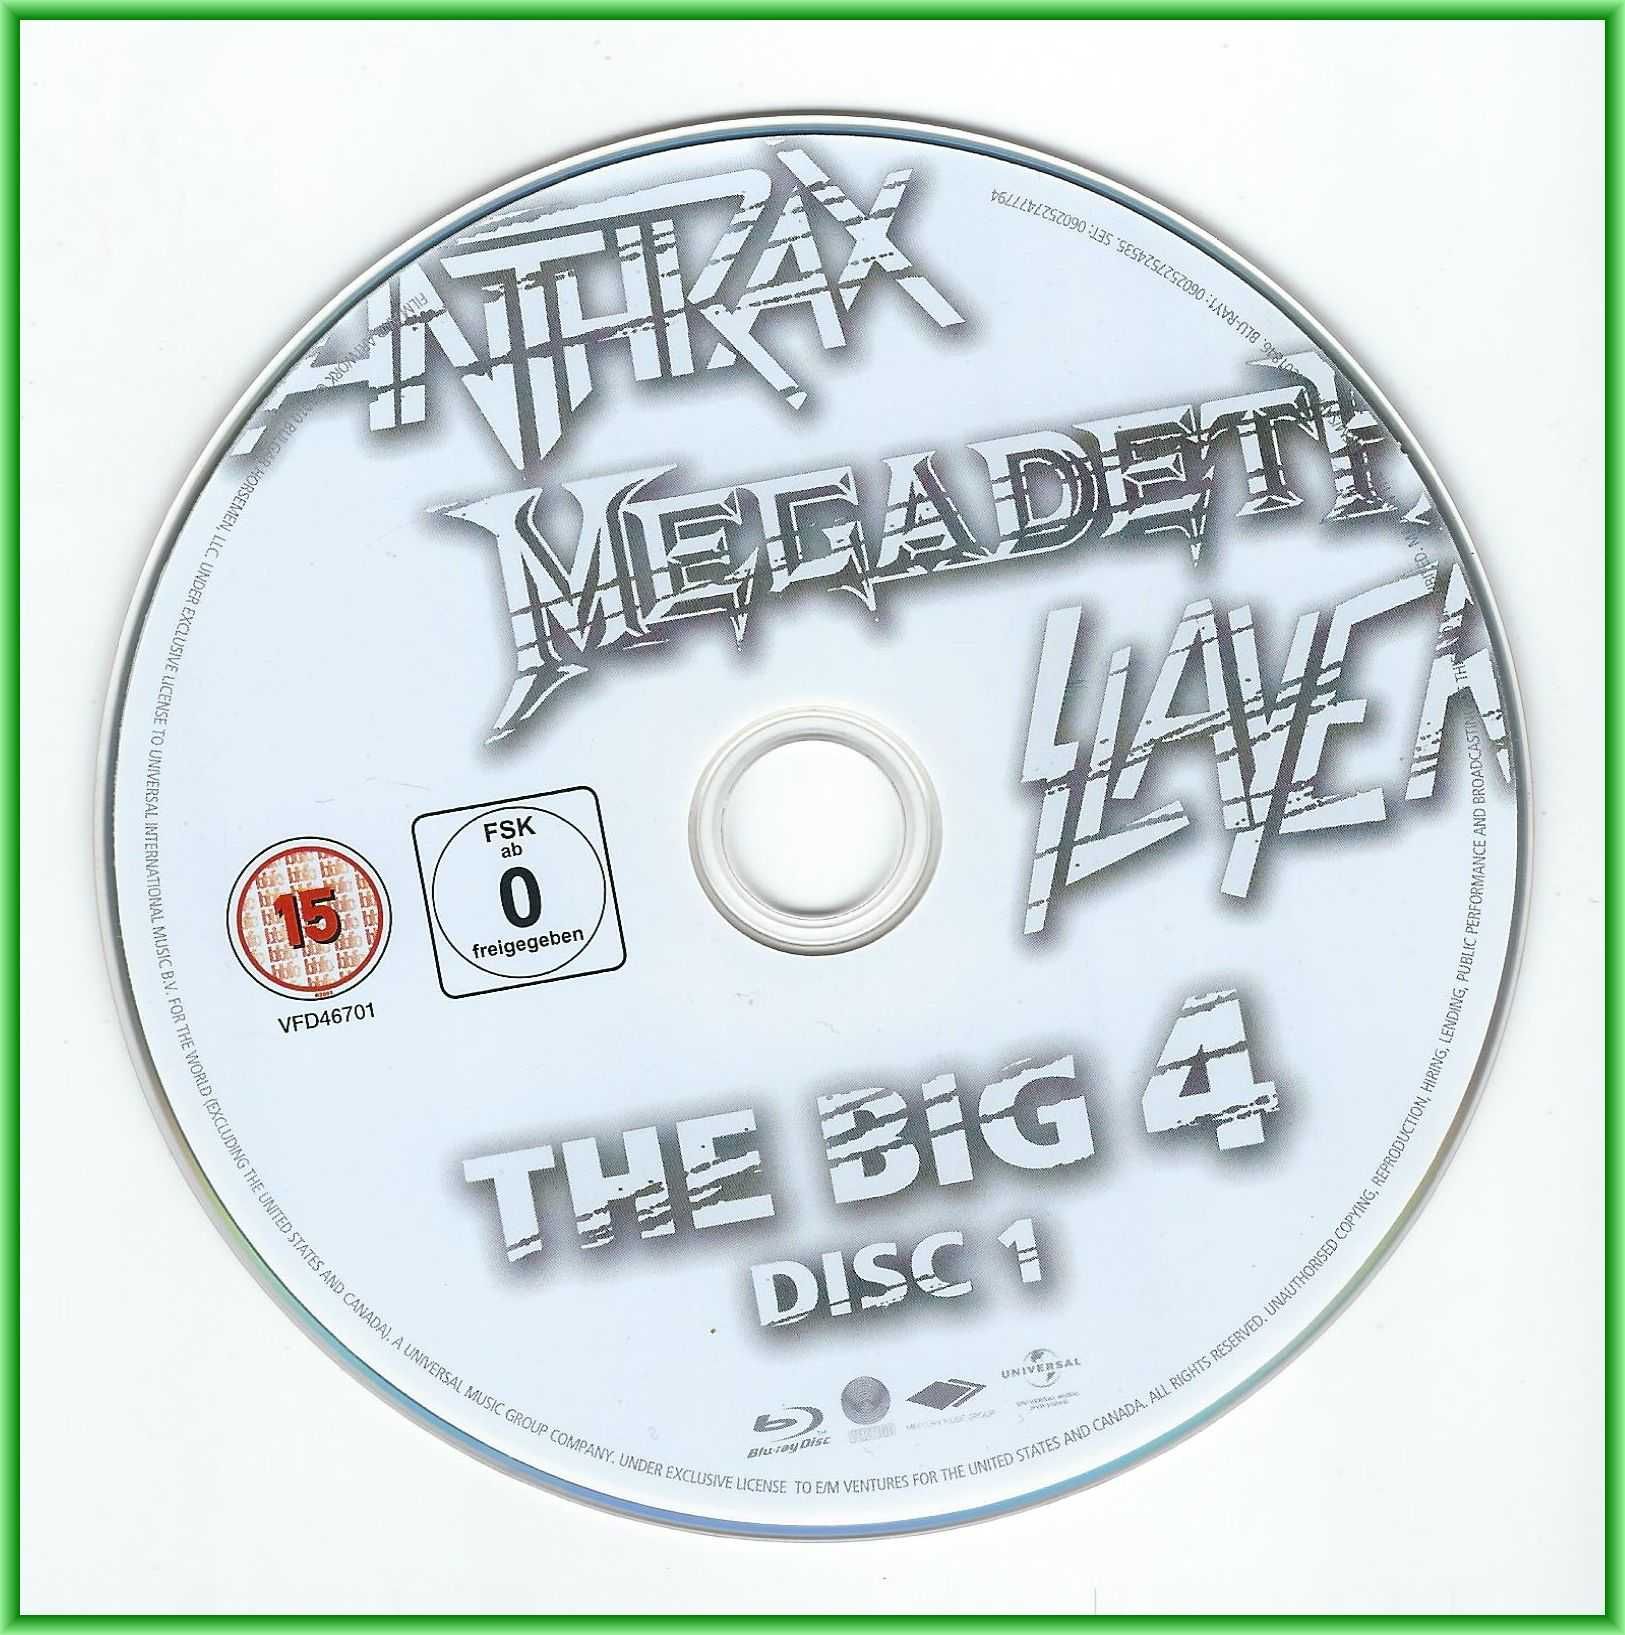 2 BR Metallica, Slayer, Megadeth, Anthrax - The Big 4 Live From Sofia